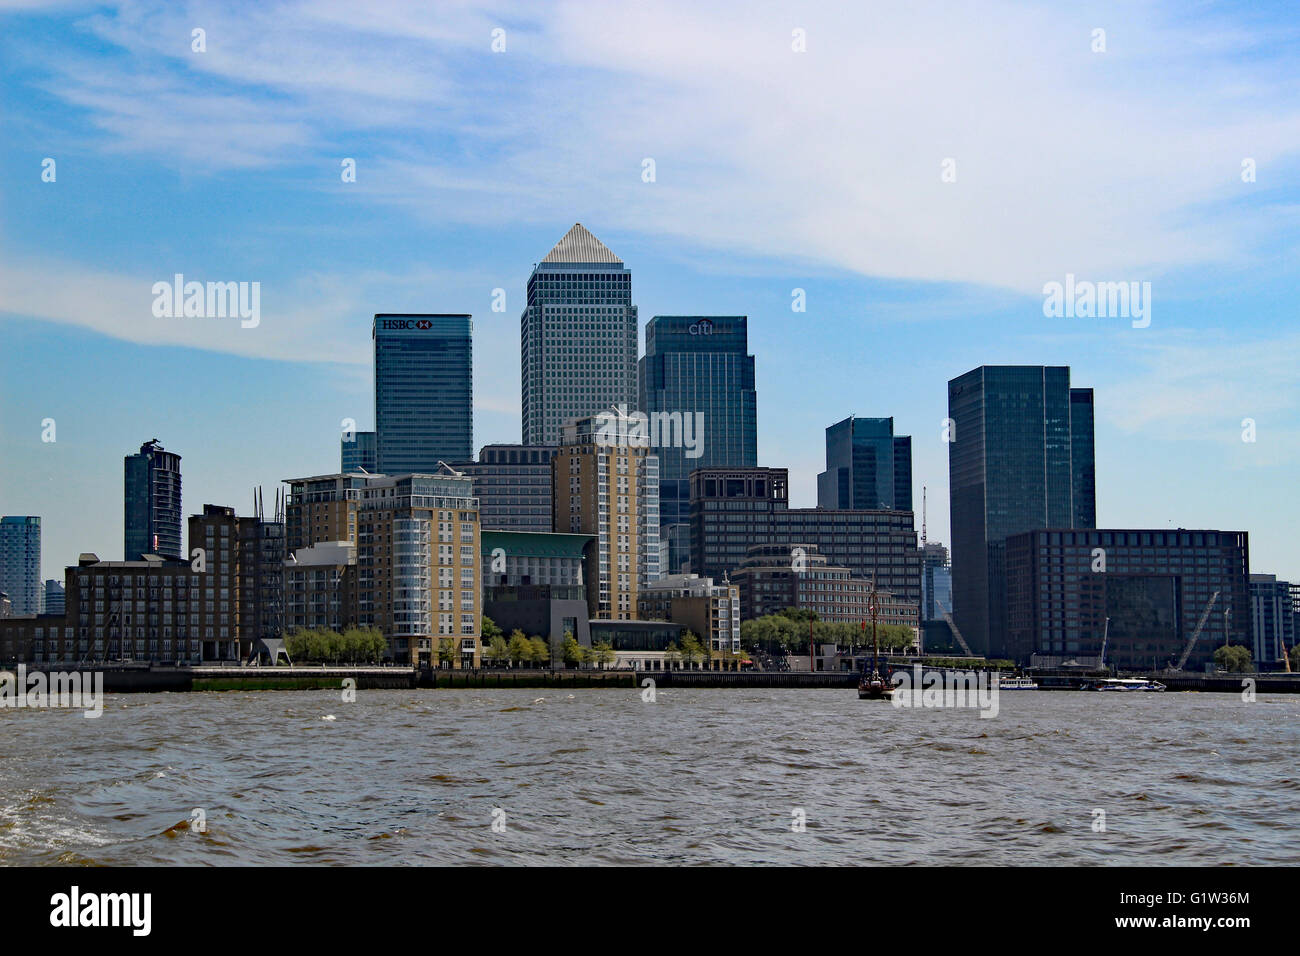 London Docklands London Skyline River Thames CITI BANK HSBC Canary Wharf Stock Photo